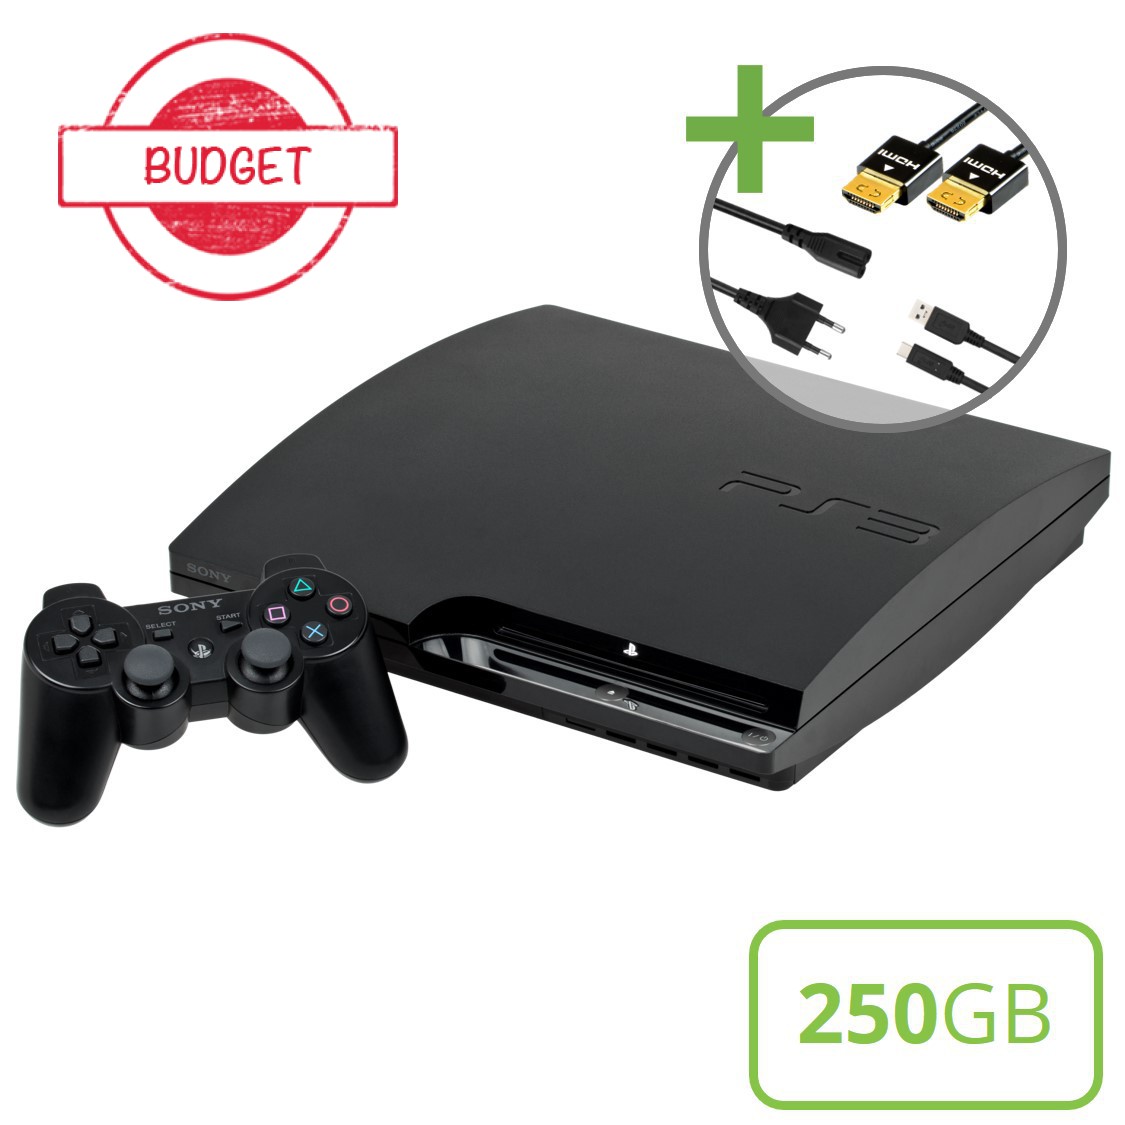 Sony PlayStation 3 Slim (250GB) Starter Pack - DualShock Edition - Budget Kopen | Playstation 3 Hardware